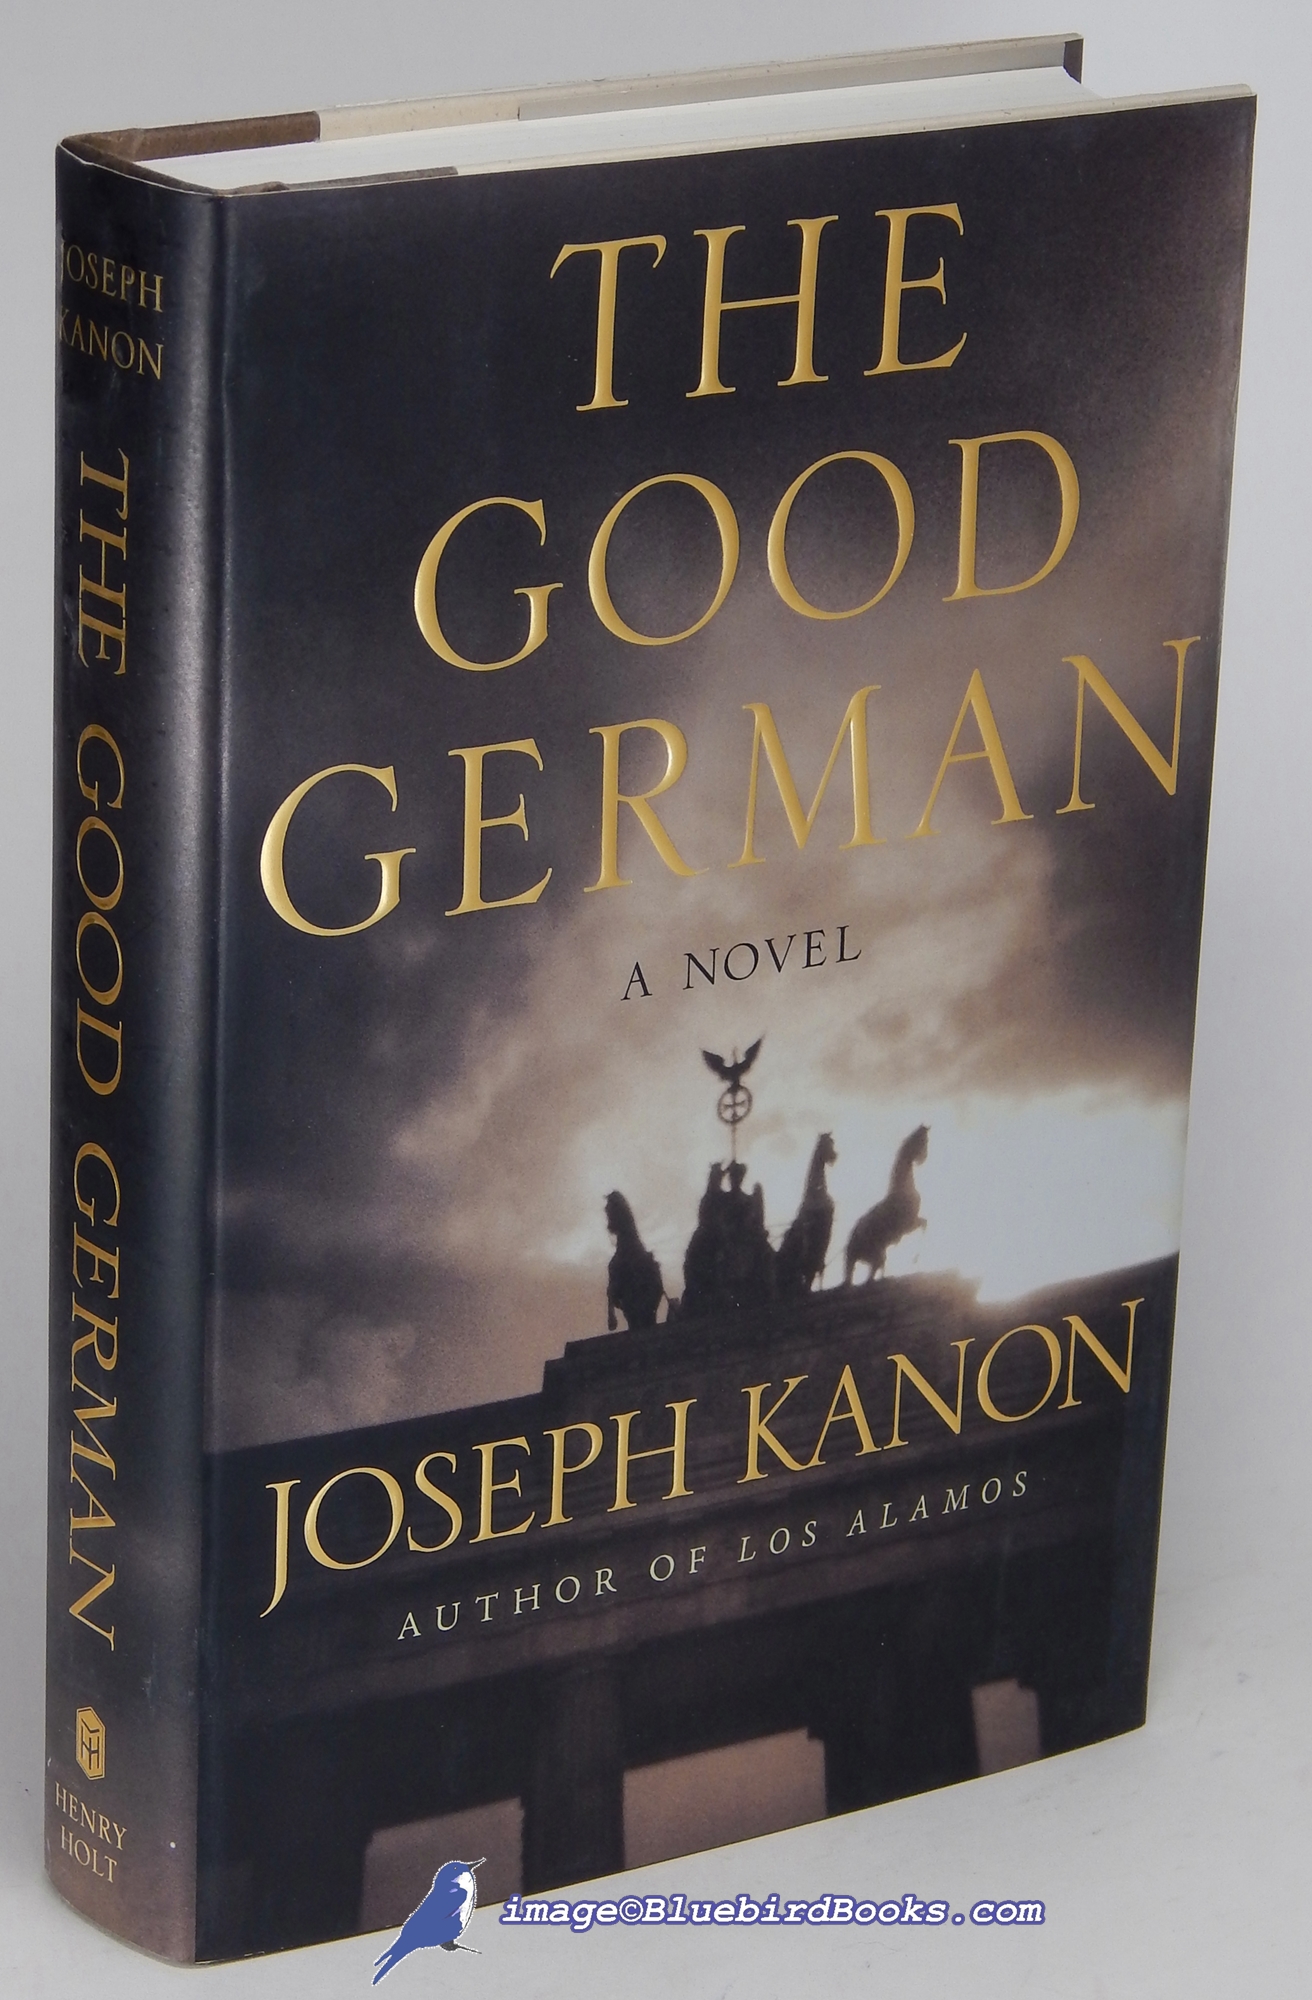 KANON, JOSEPH - The Good German: A Novel